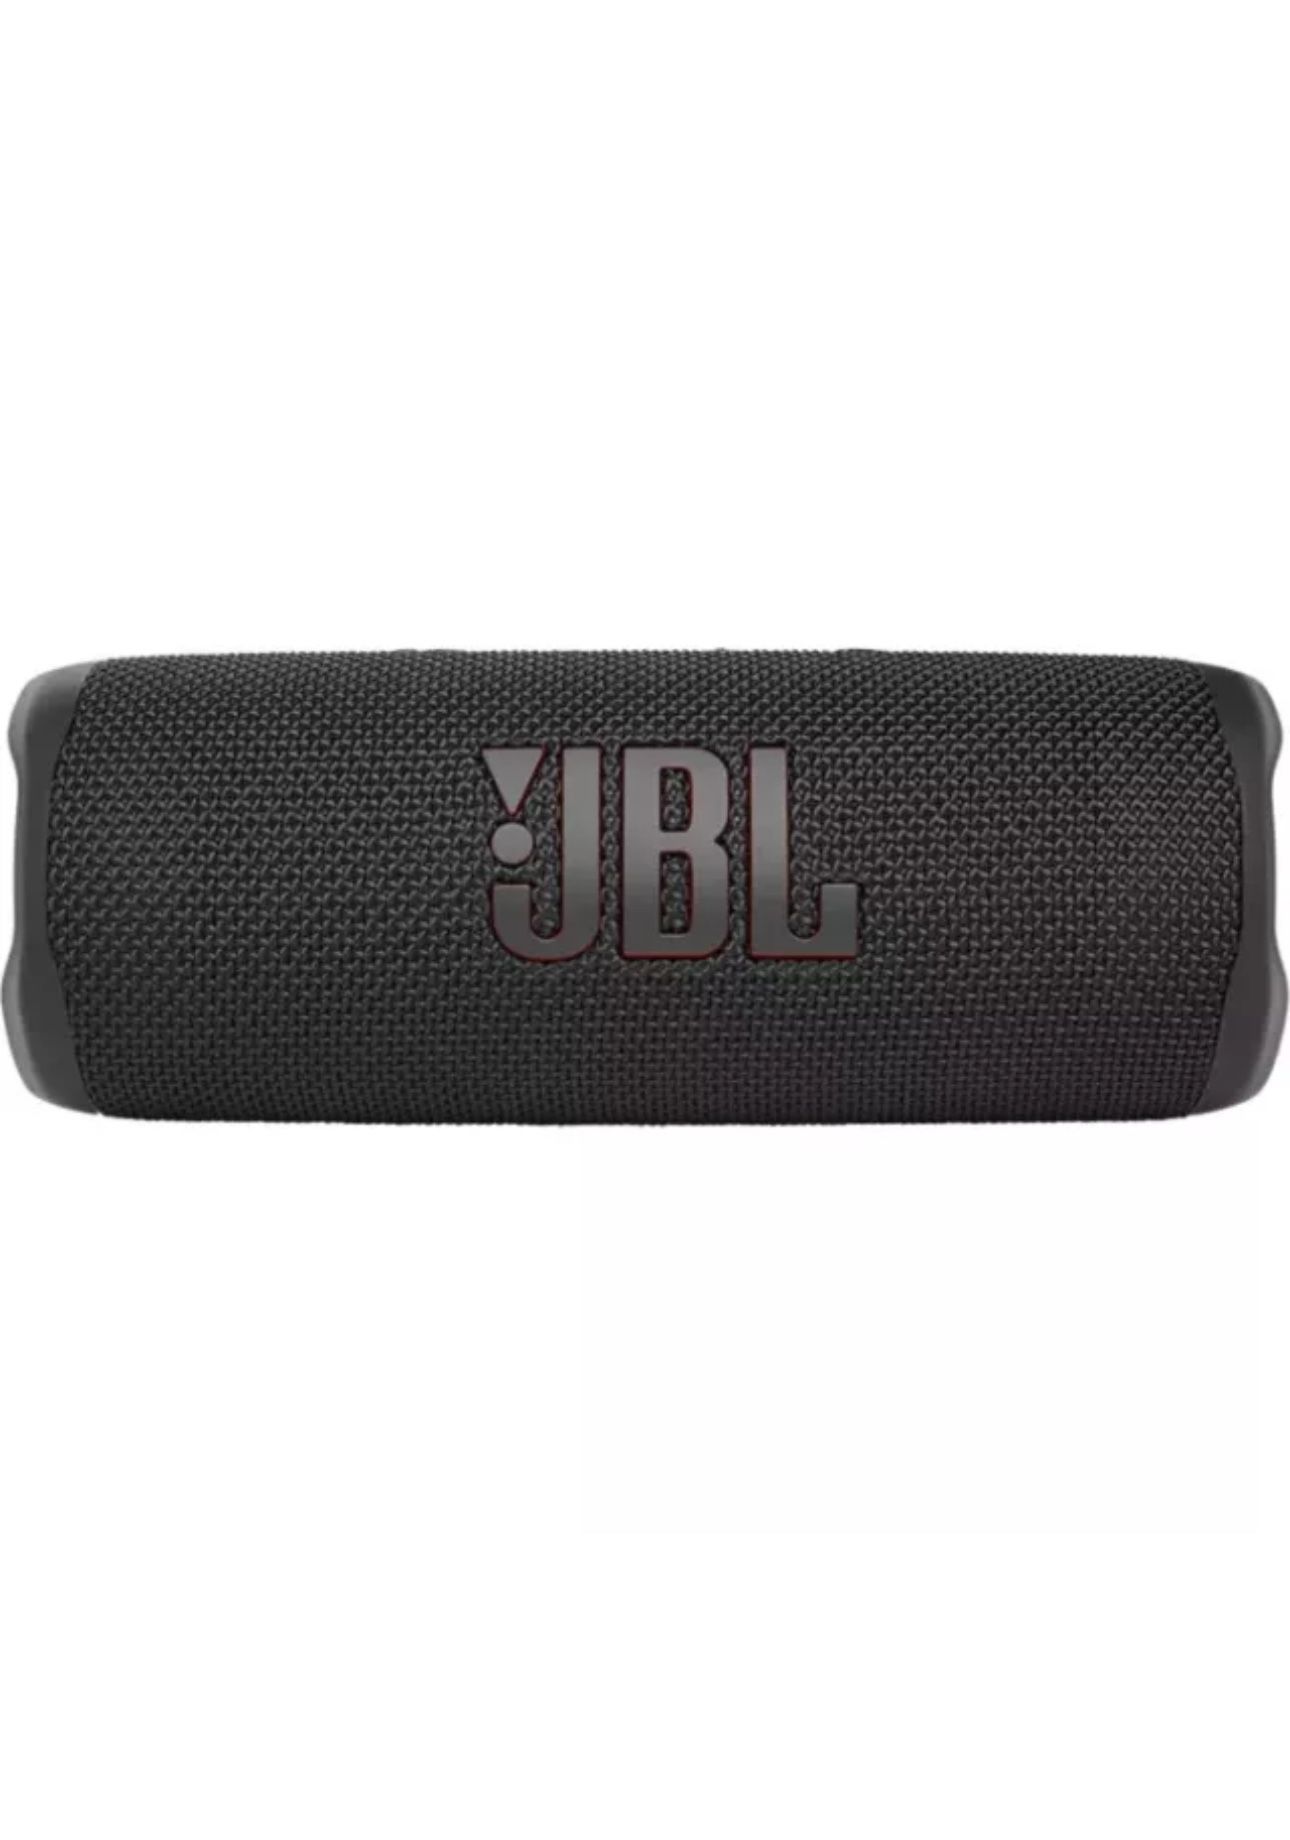 New JBL Flip 6 Portable Waterproof Bluetooth Speaker Black JBLFLIP6BLKAM